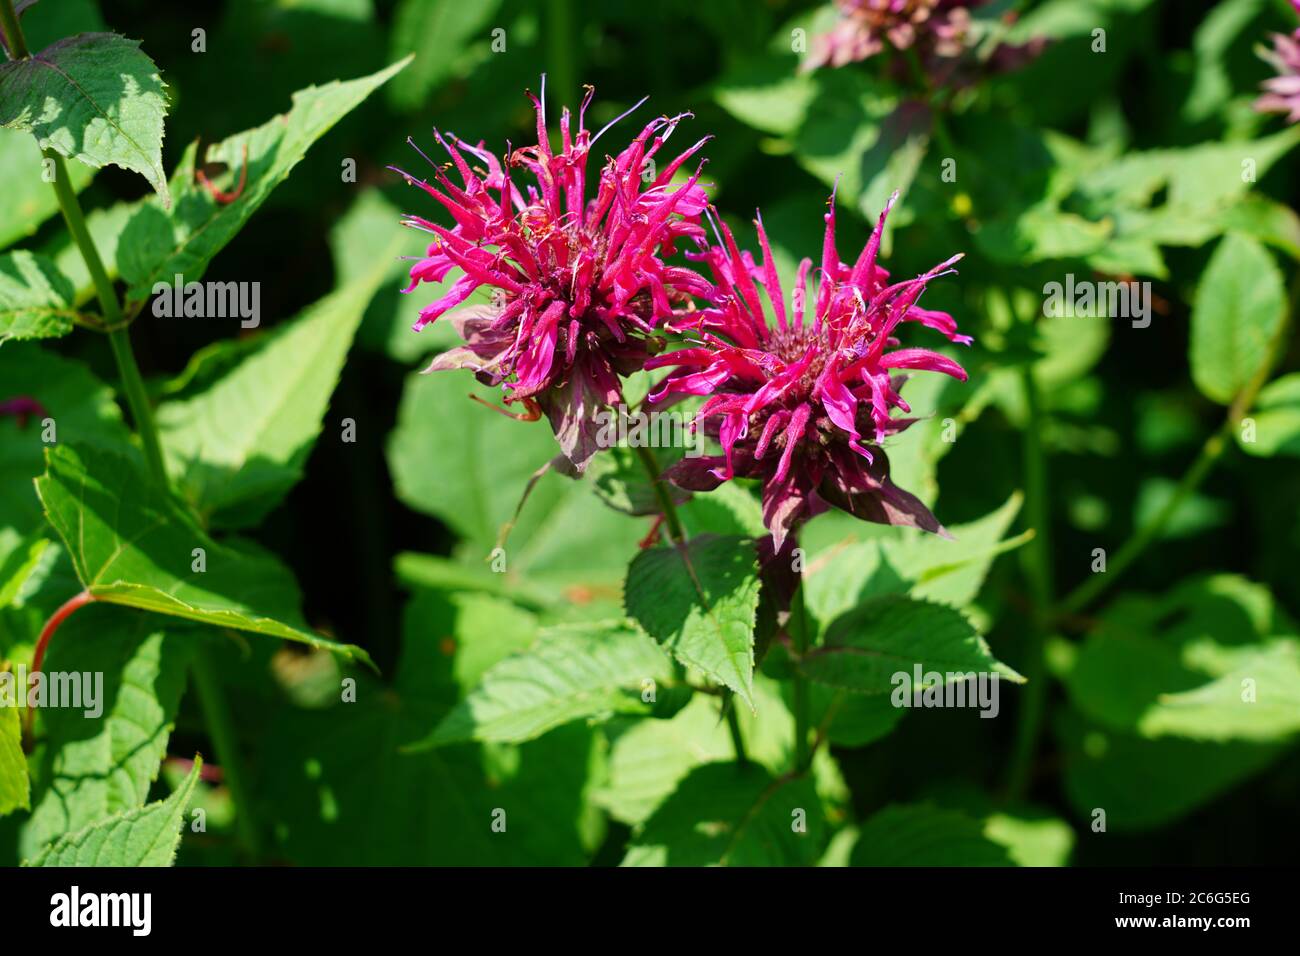 Red flowers of bee balm Monarda Stock Photo